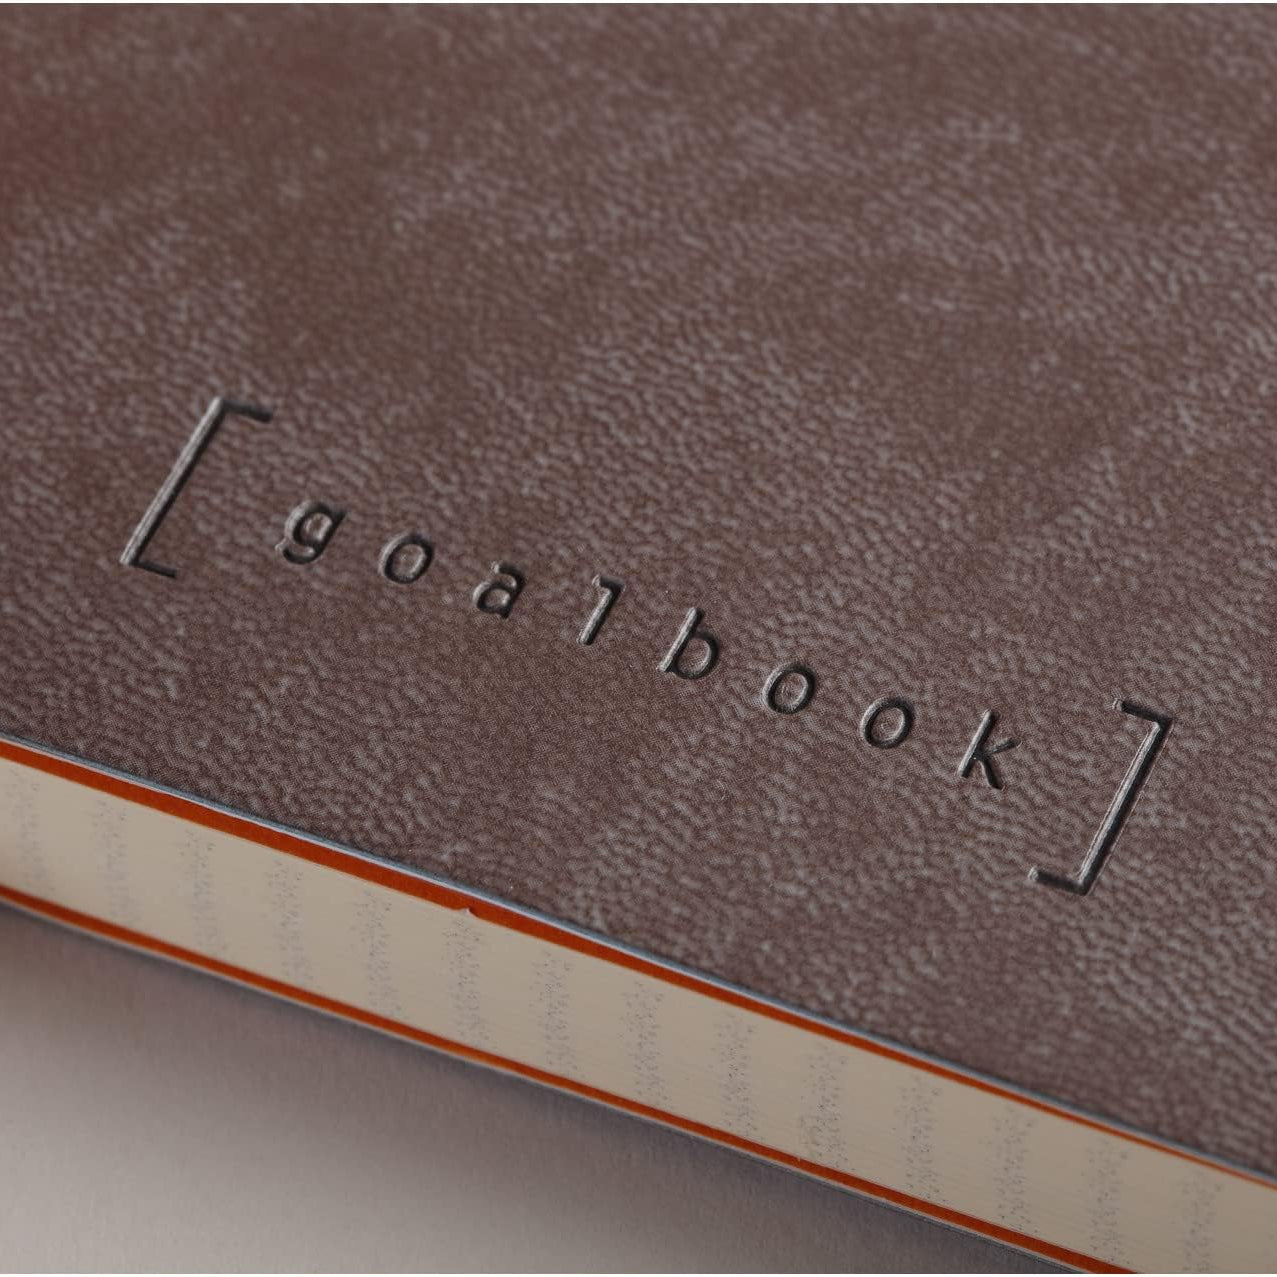 RHODIArama Goalbook A5 White Dot Soft-Chocolate